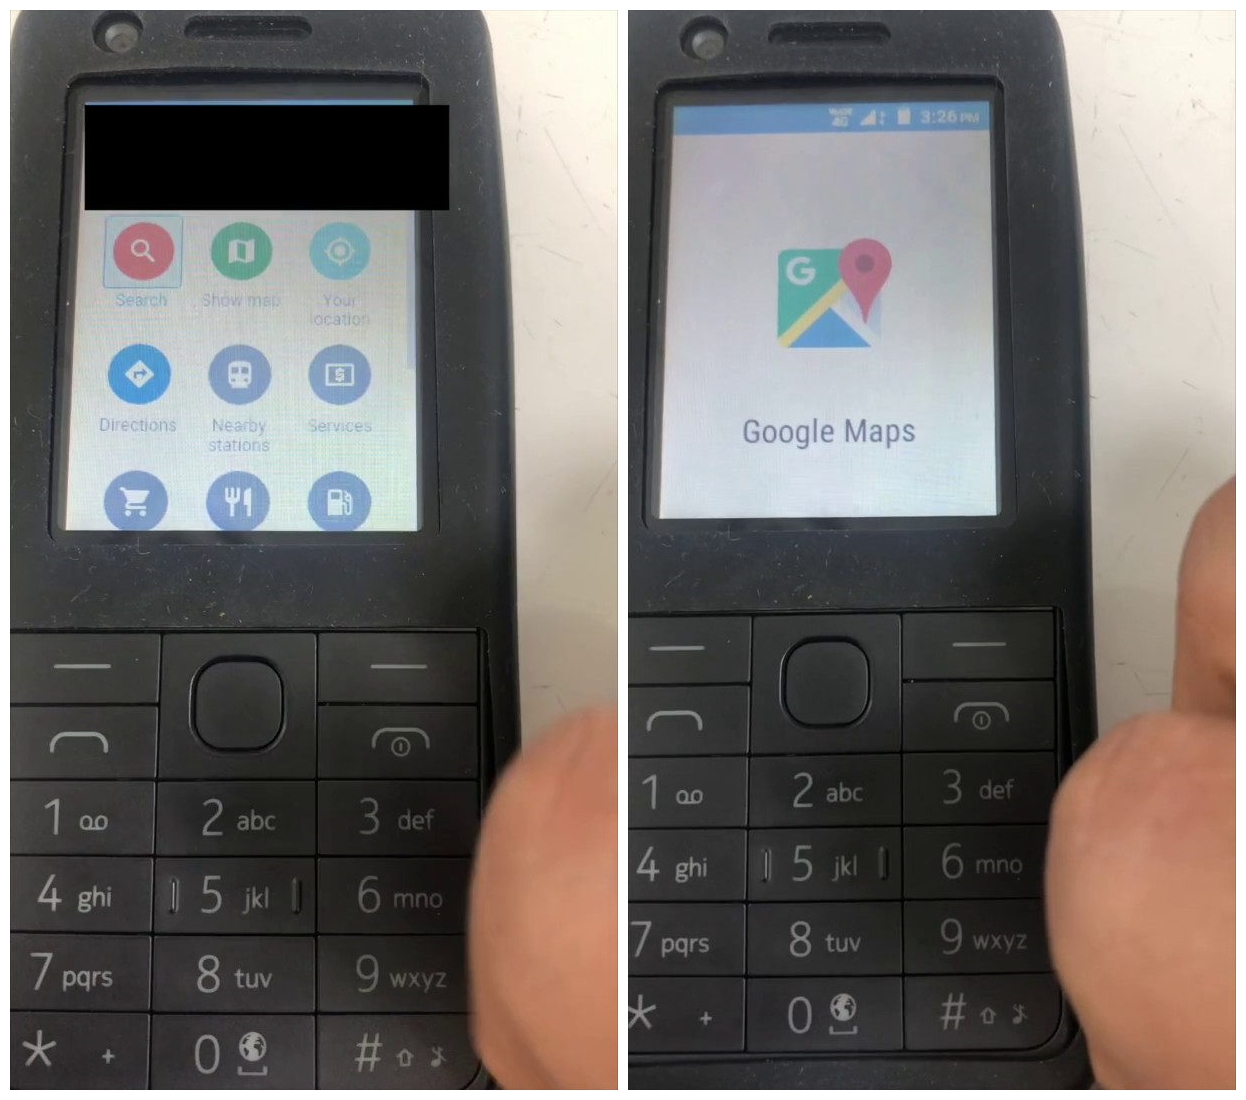  Кнопочный телефон от Nokia на базе Android Другие устройства  - Android-Feature-Phone-a